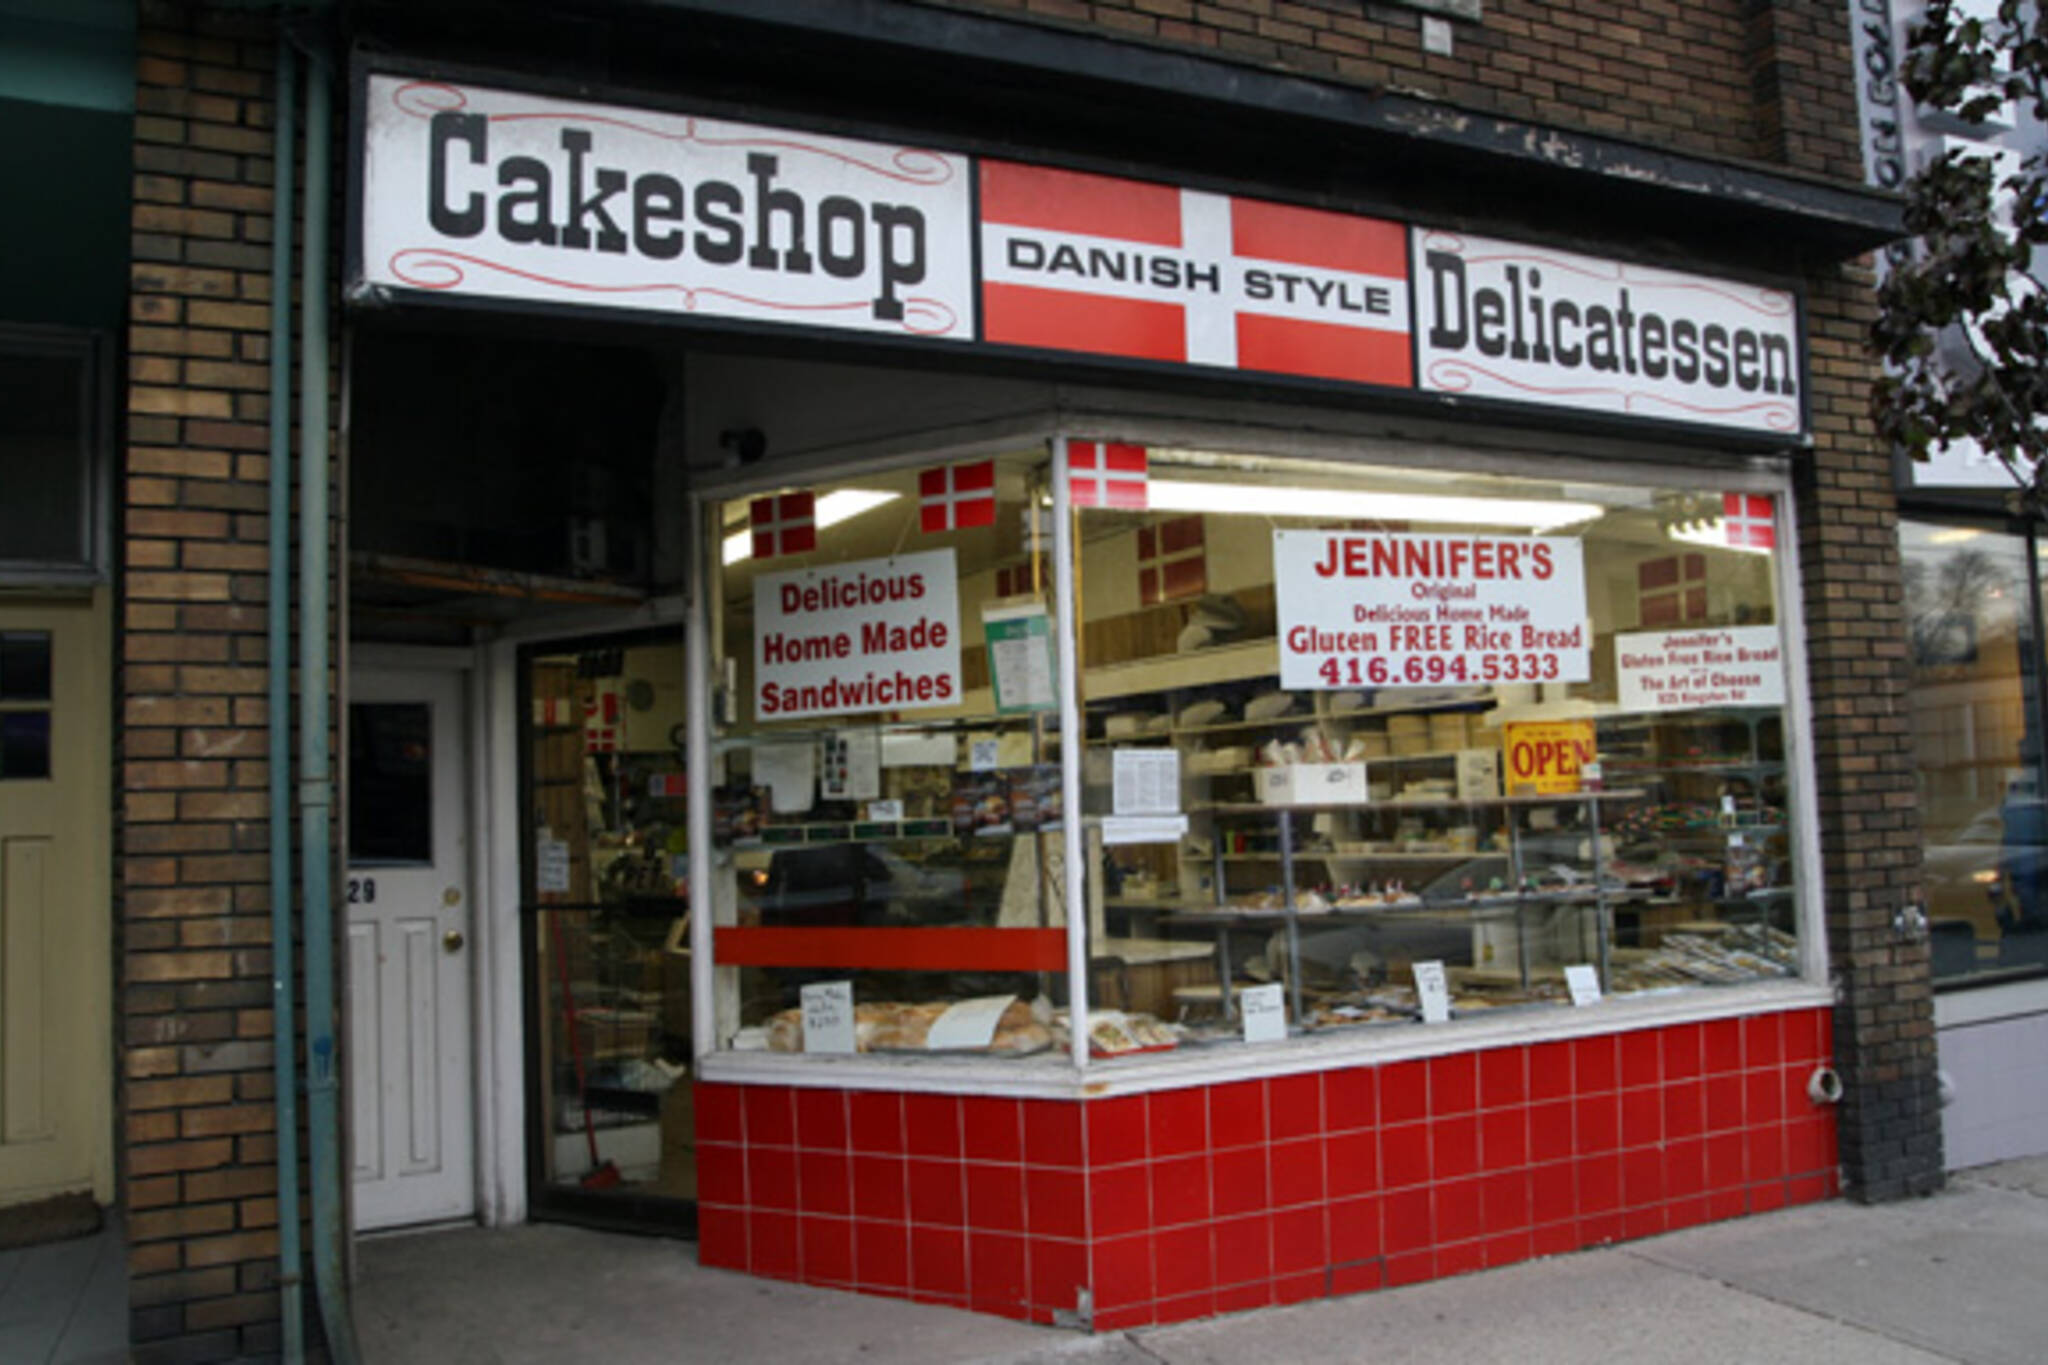 Danish Style Cake Shop & Delicatessen